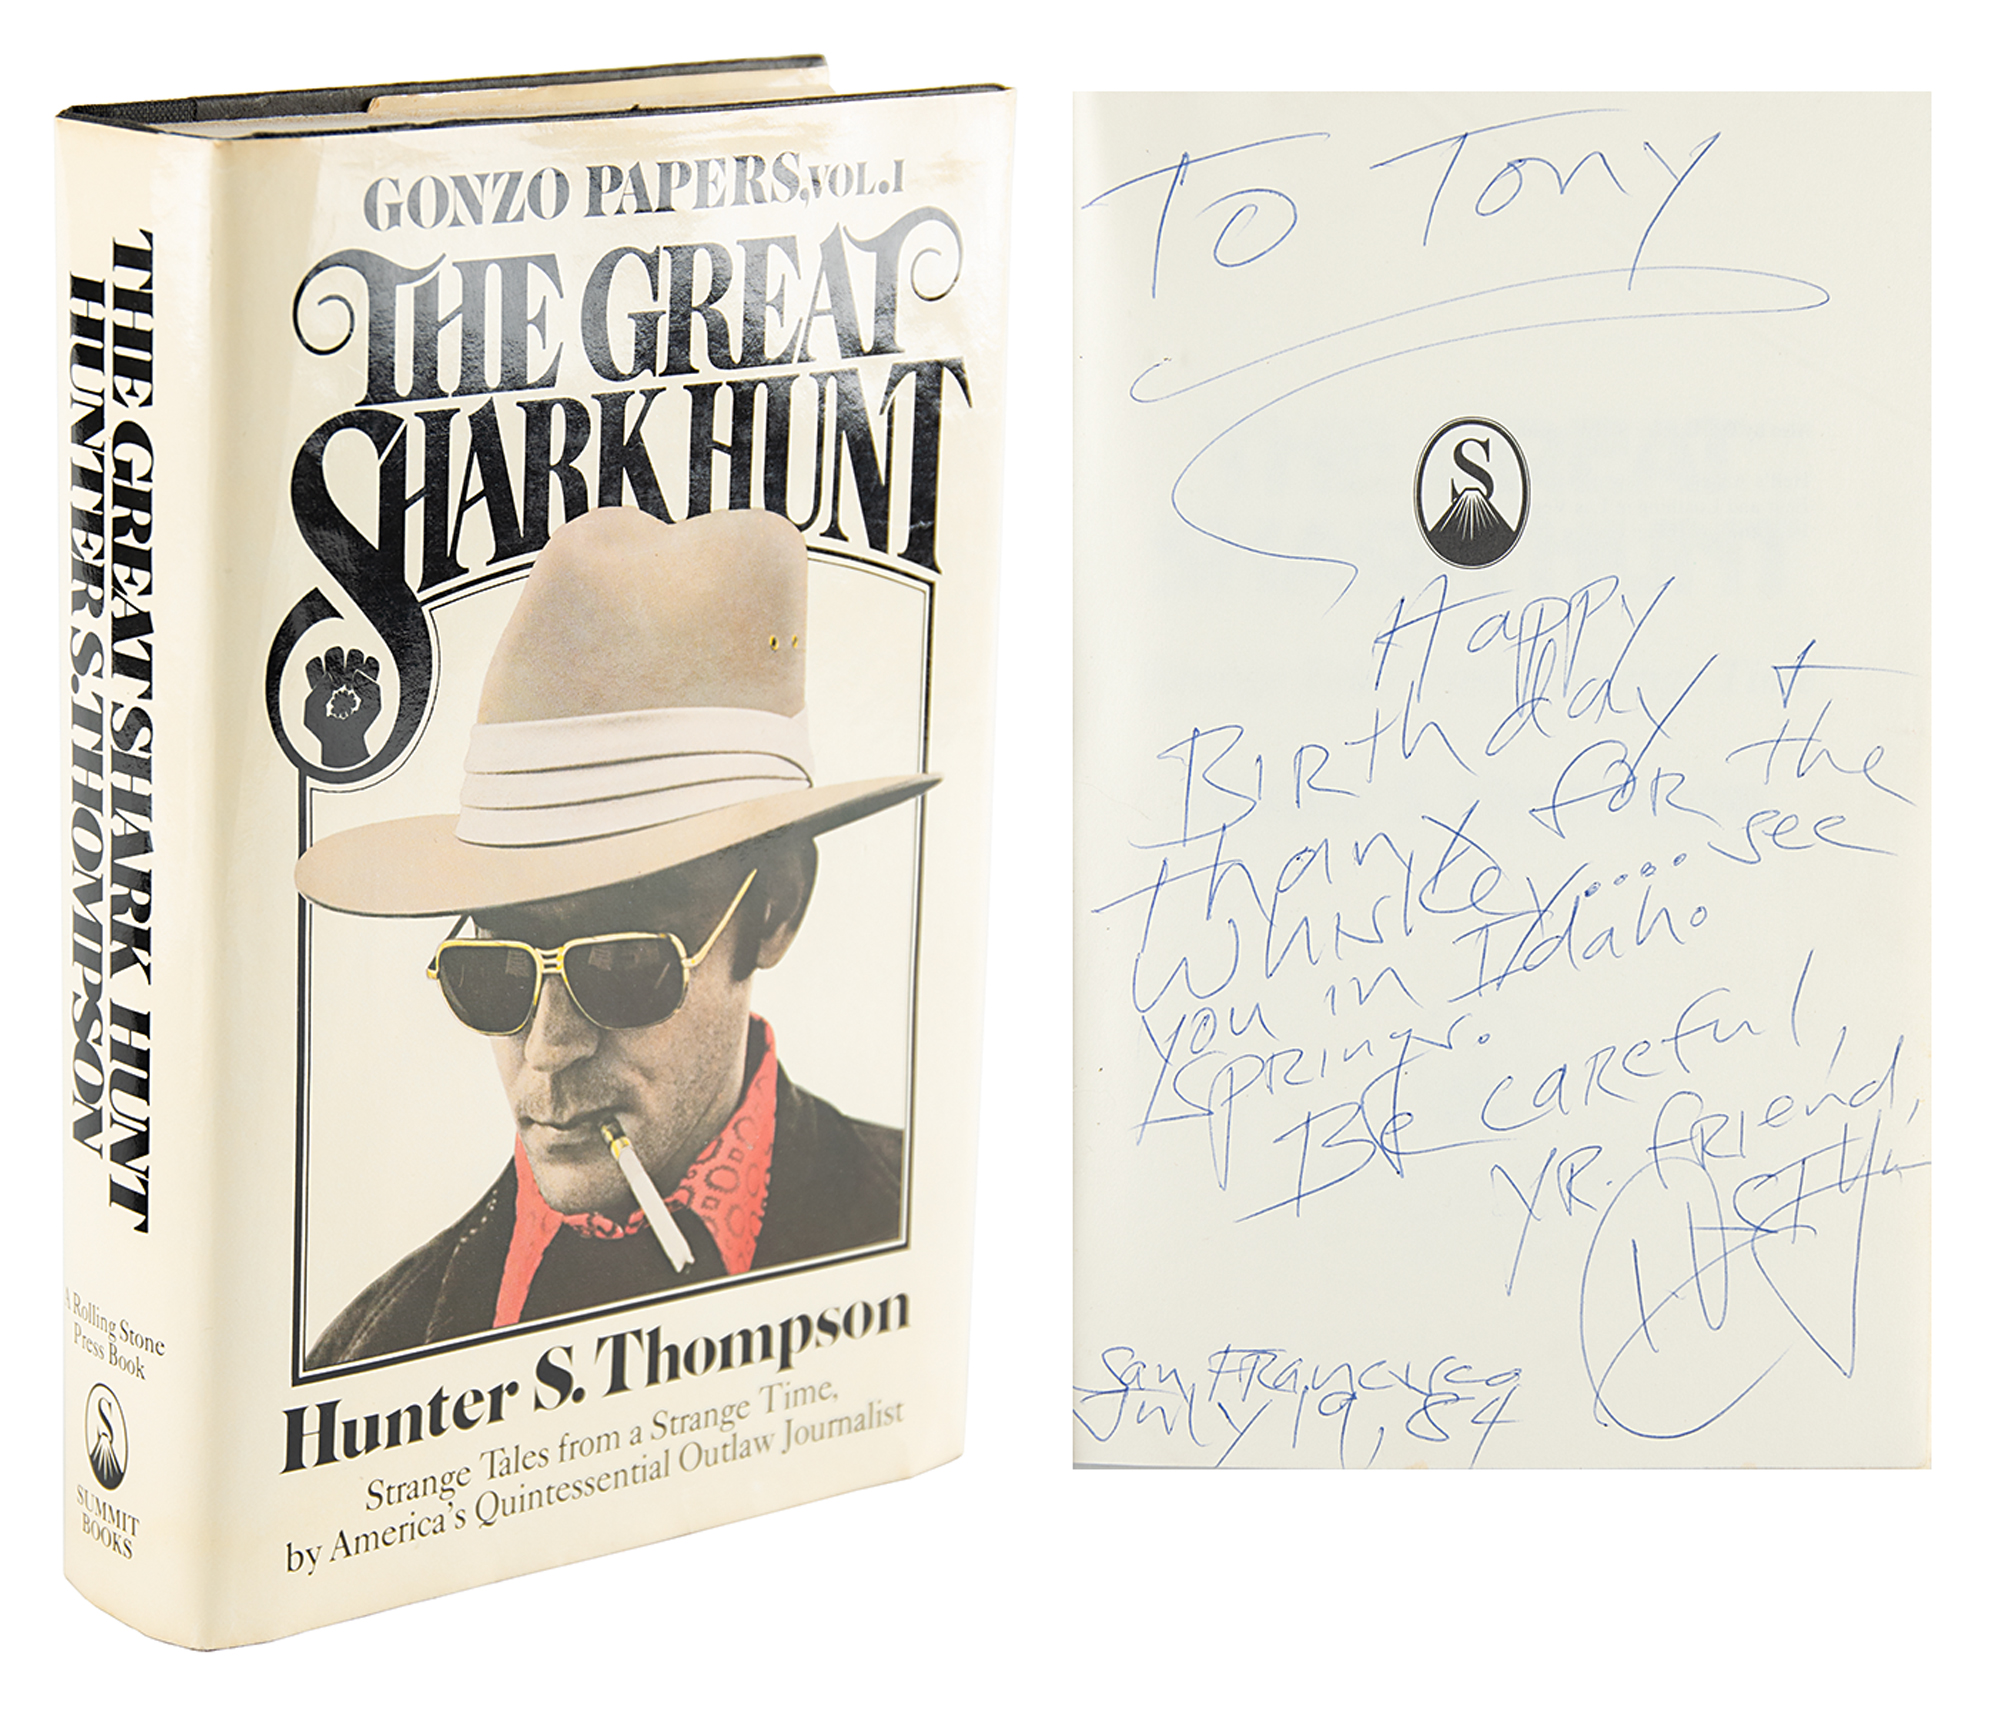 Lot #443 Hunter S. Thompson Signed Book